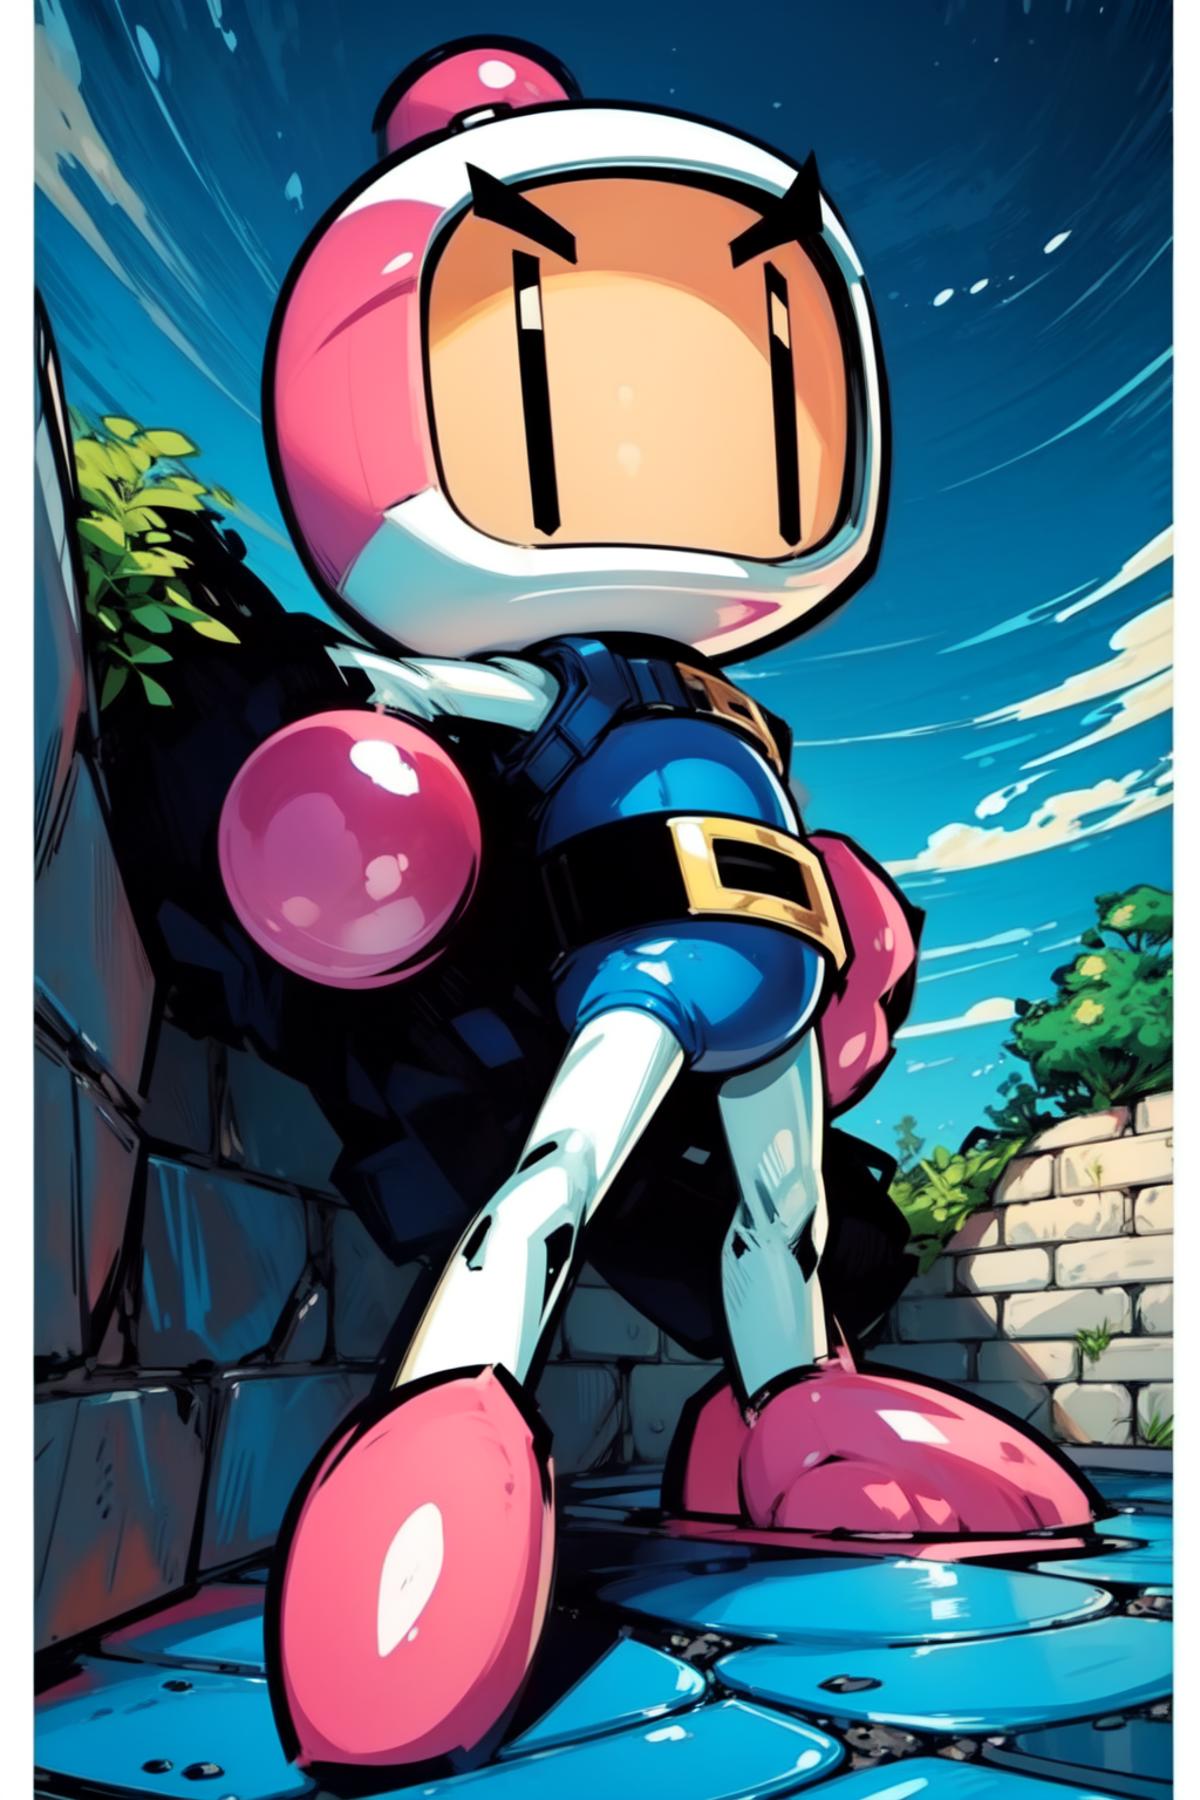 Bomberman image by Kayako